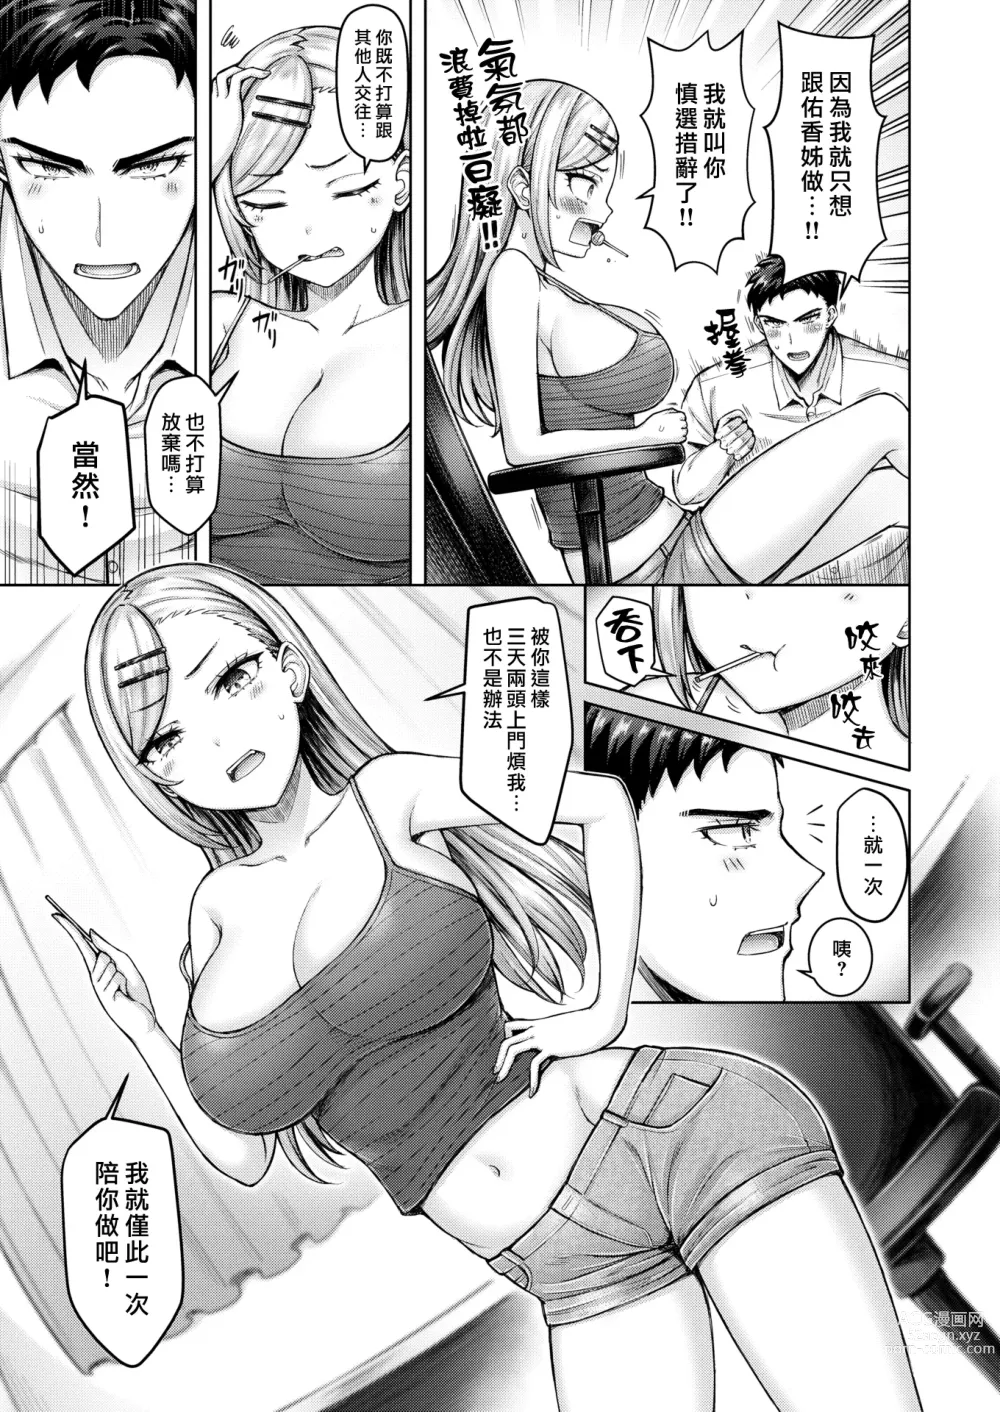 Page 5 of manga 老娘可不像糖果那麼天真啊!!